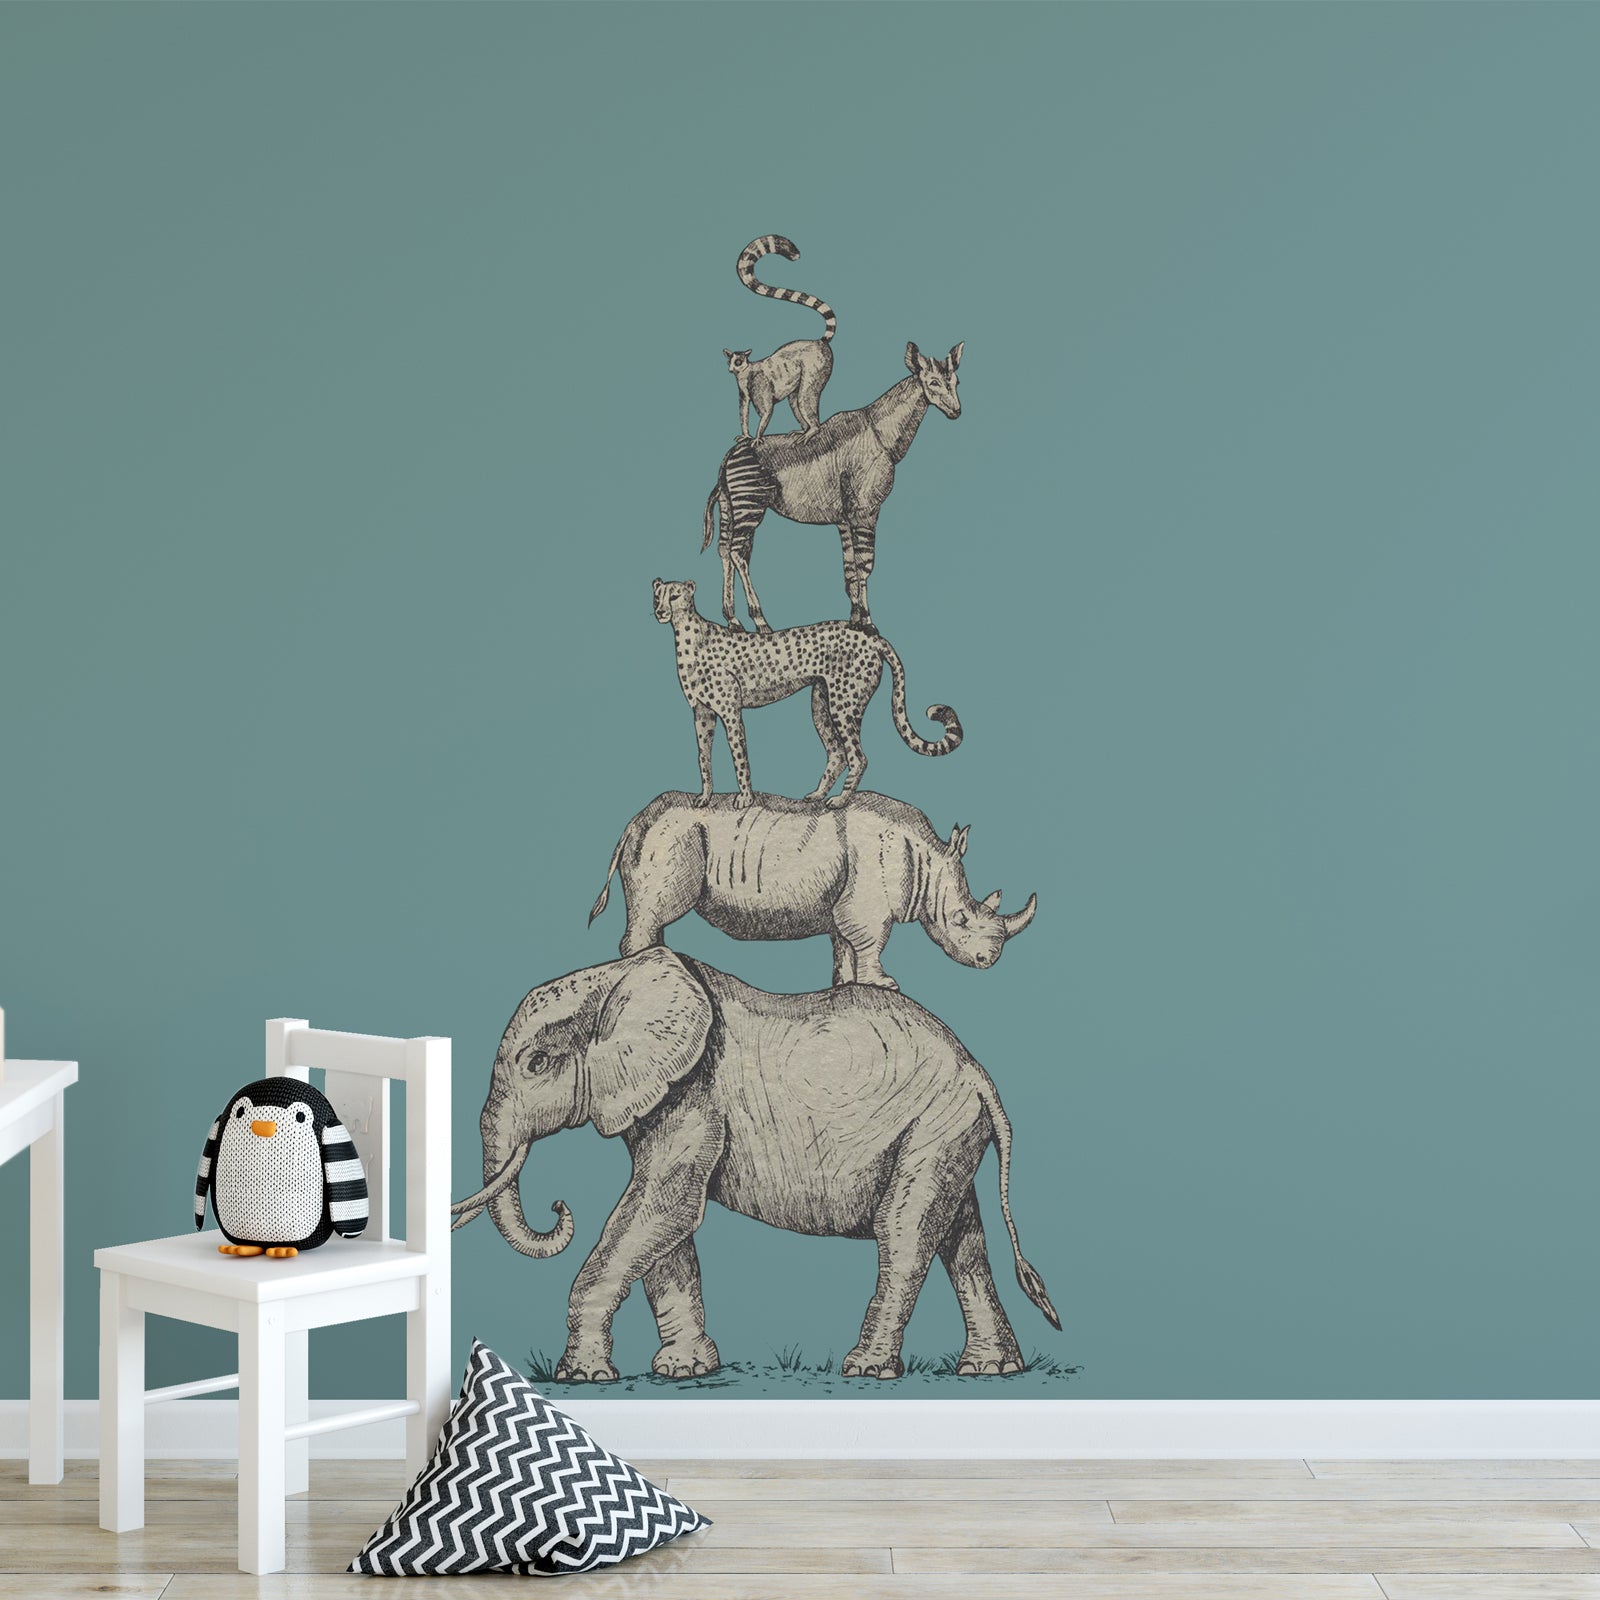 Animals wallpaper